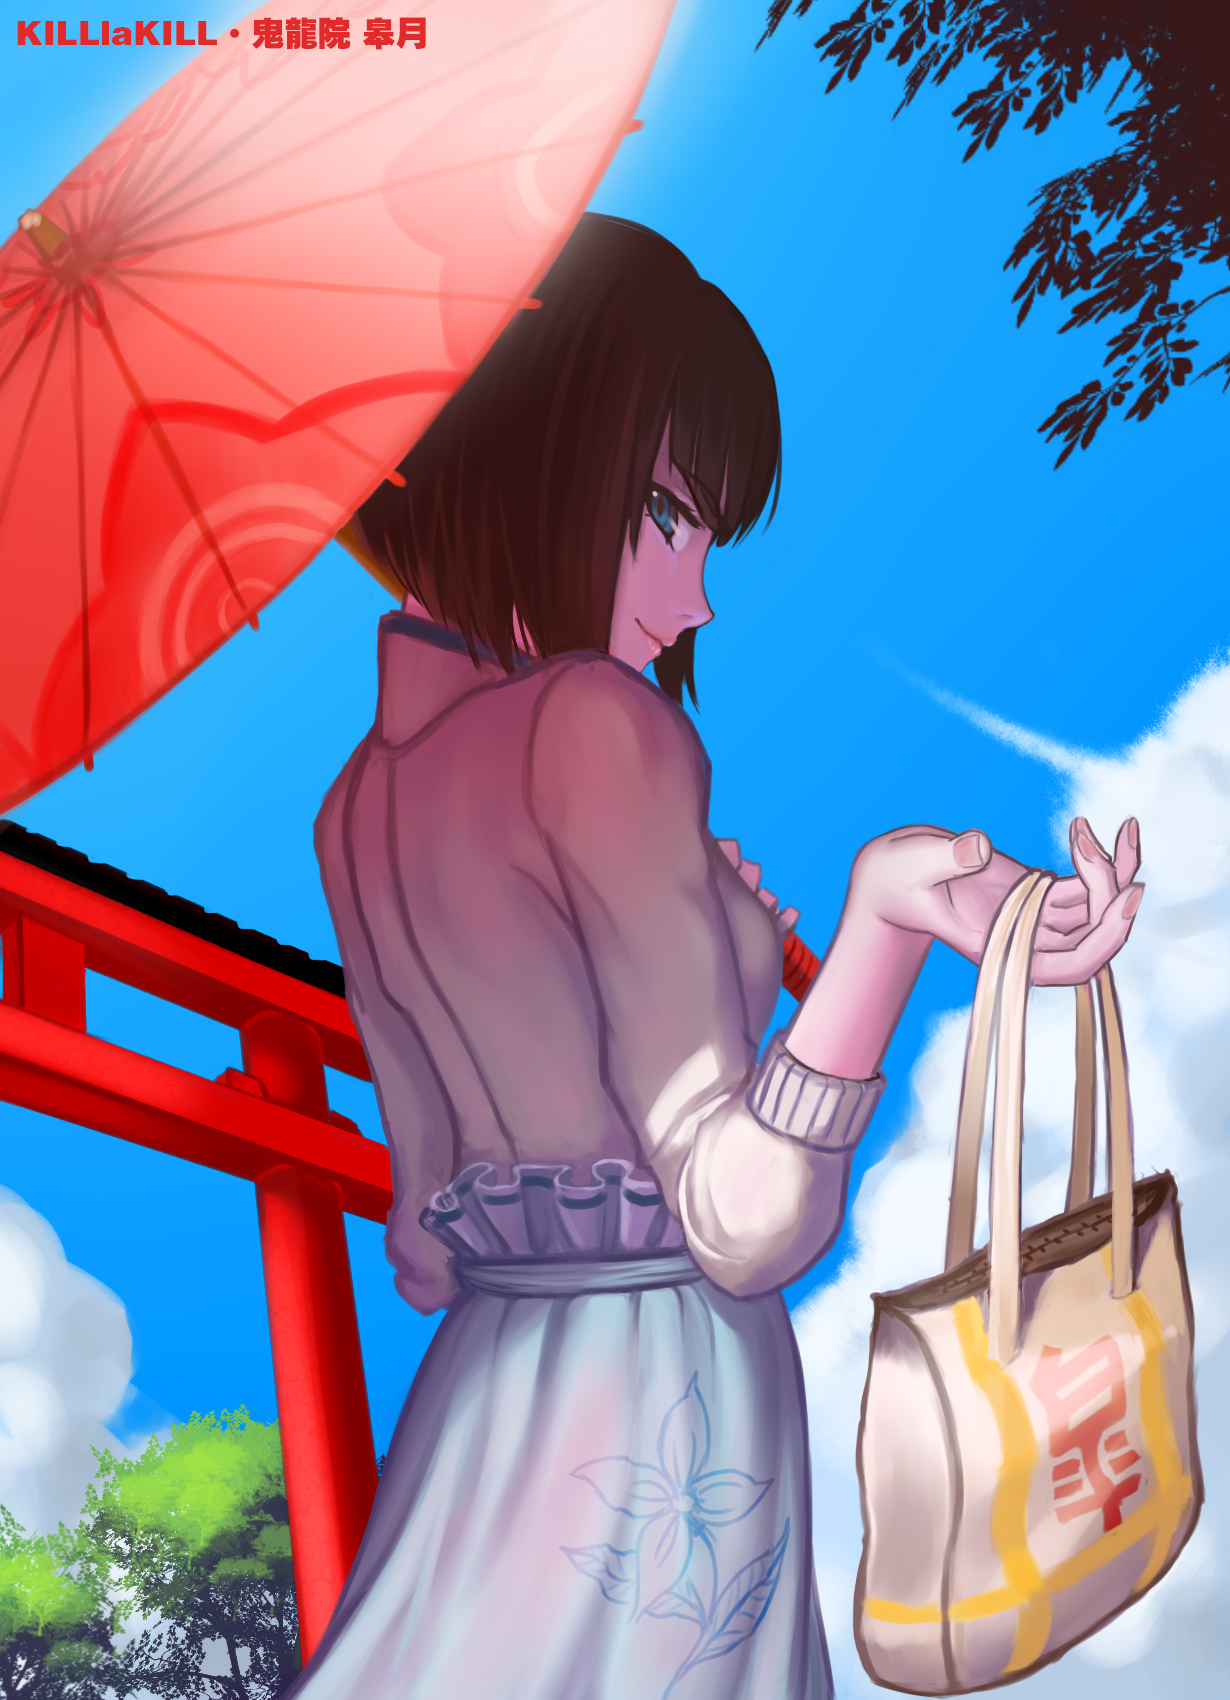 Anime 1230x1700 Kill la Kill anime girls long skirt women with umbrella short hair small boobs clear sky temple white sweater blue skirt smiling Kiryuin Satsuki anime